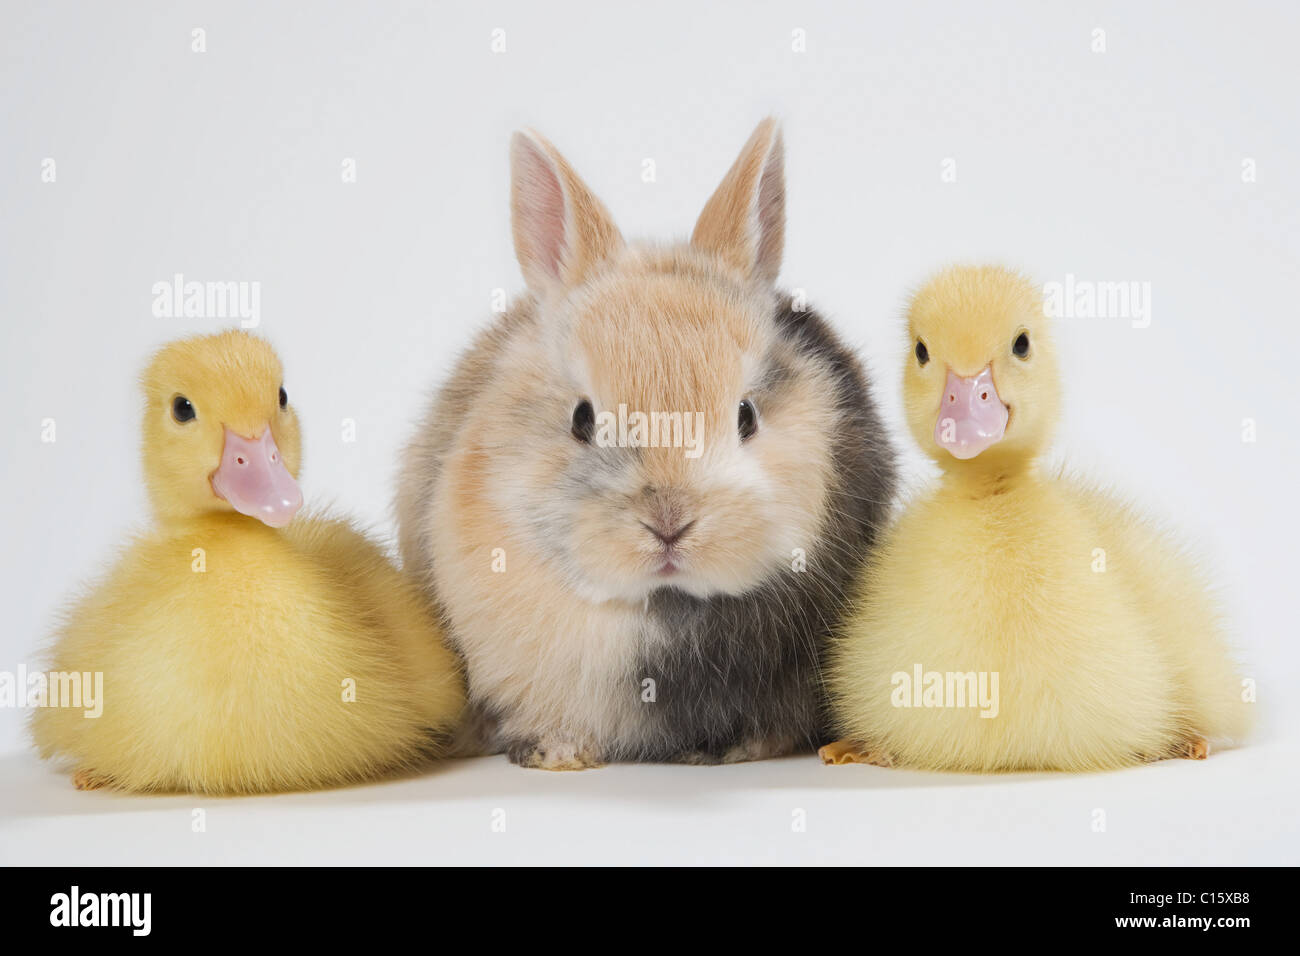 Cute Cartoon Duckling Depicted Profile Rabbit Stock Illustration 358243046